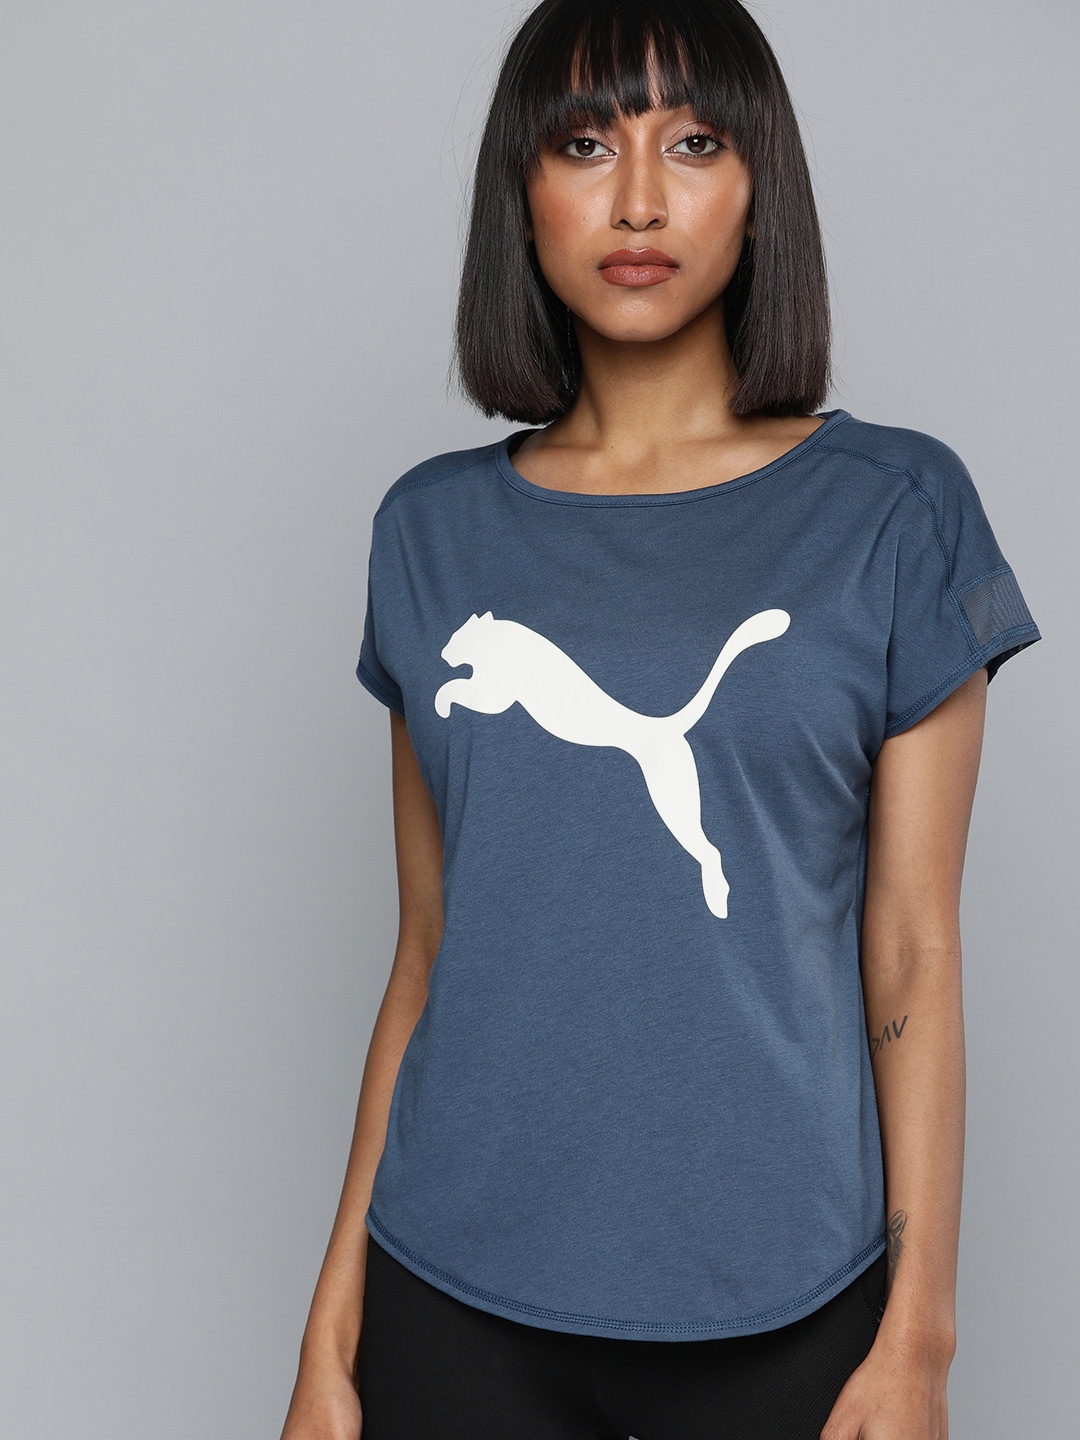 Buy Puma Women Navy Blue Printed Round Neck Training T Shirt - Tshirts ...